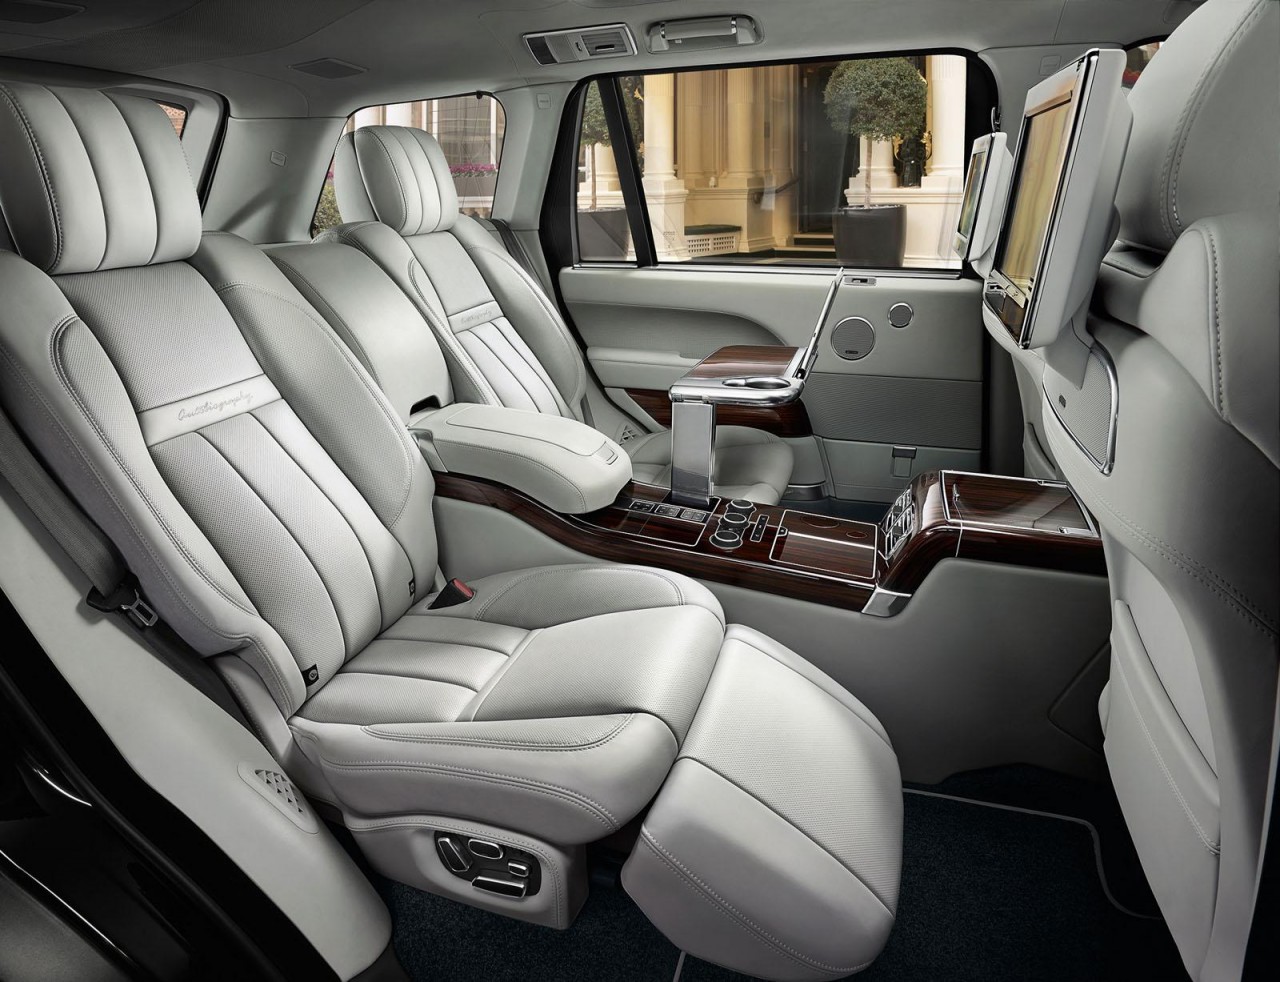 Range Rover SVAutobiography revealed, new superluxury variant